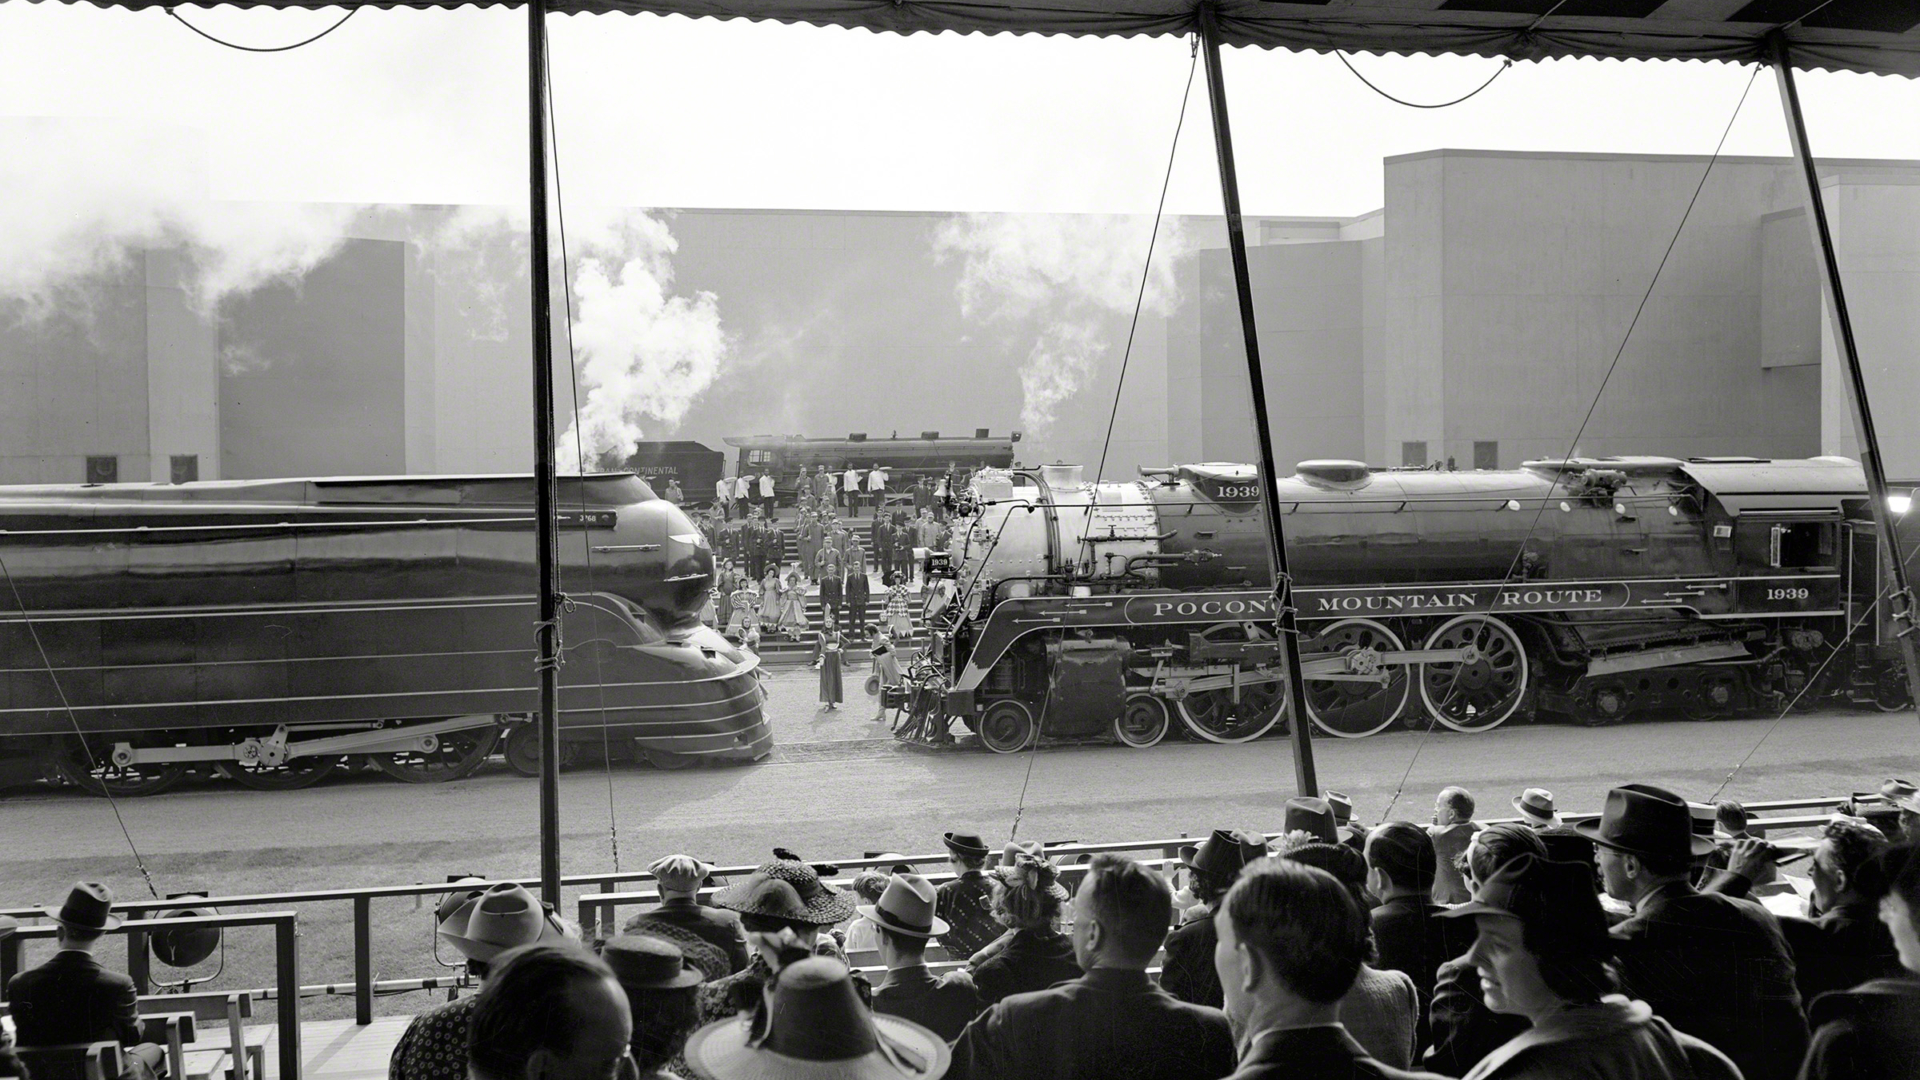 People 1920x1080 photography old photos monochrome people vintage steam locomotive railway train smoke crowds New York City vehicle USA